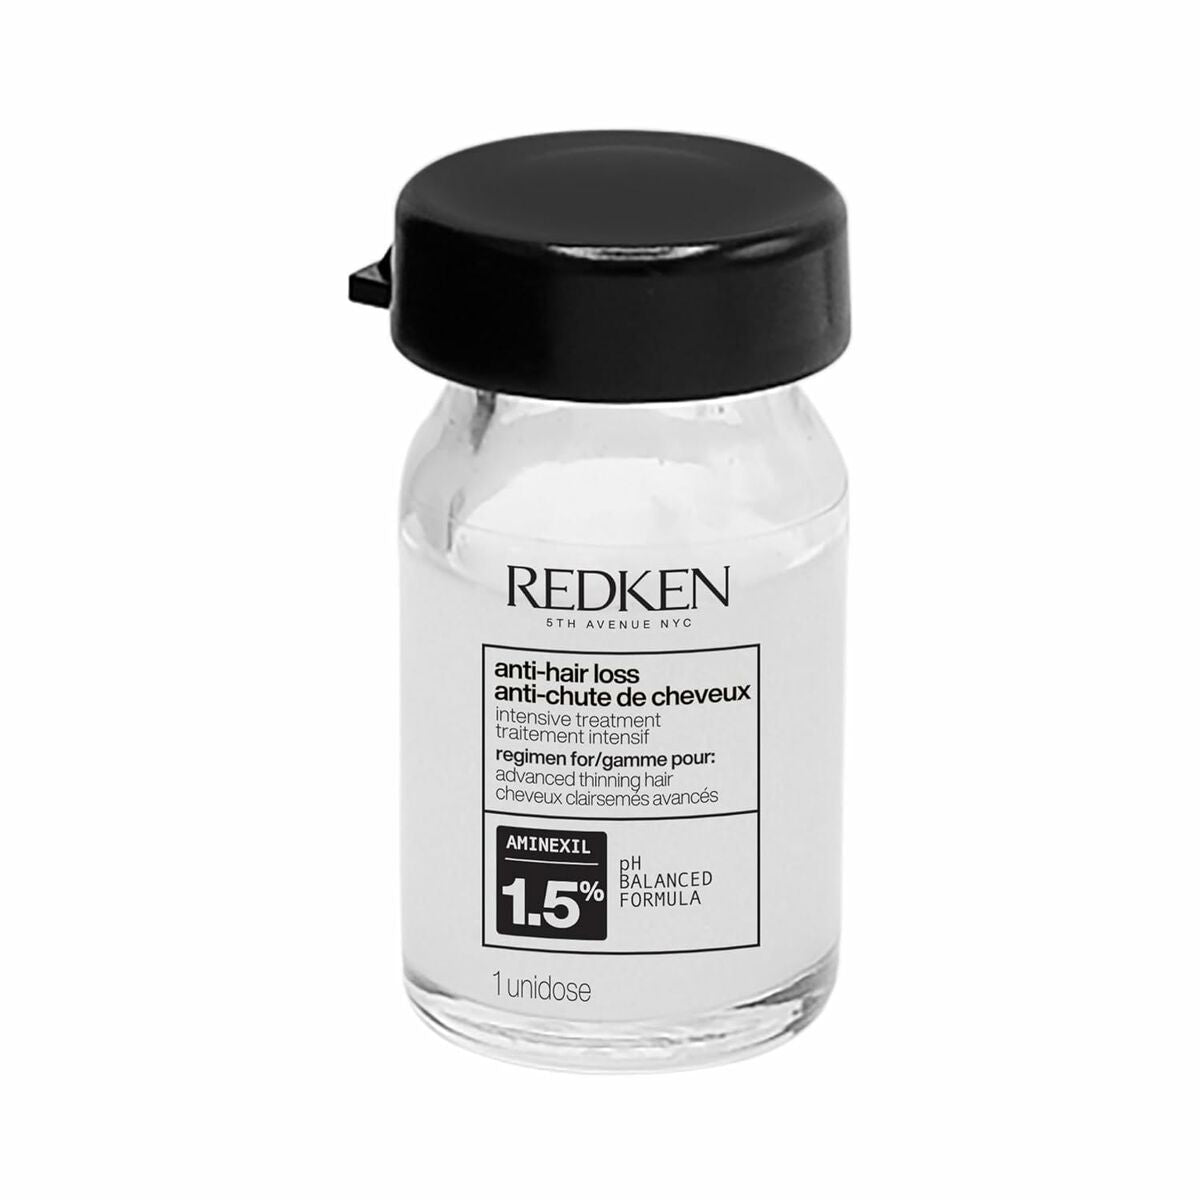 Tratamento de perda de cabelos Redken Cerafill maximize 6 ml 10 unidades